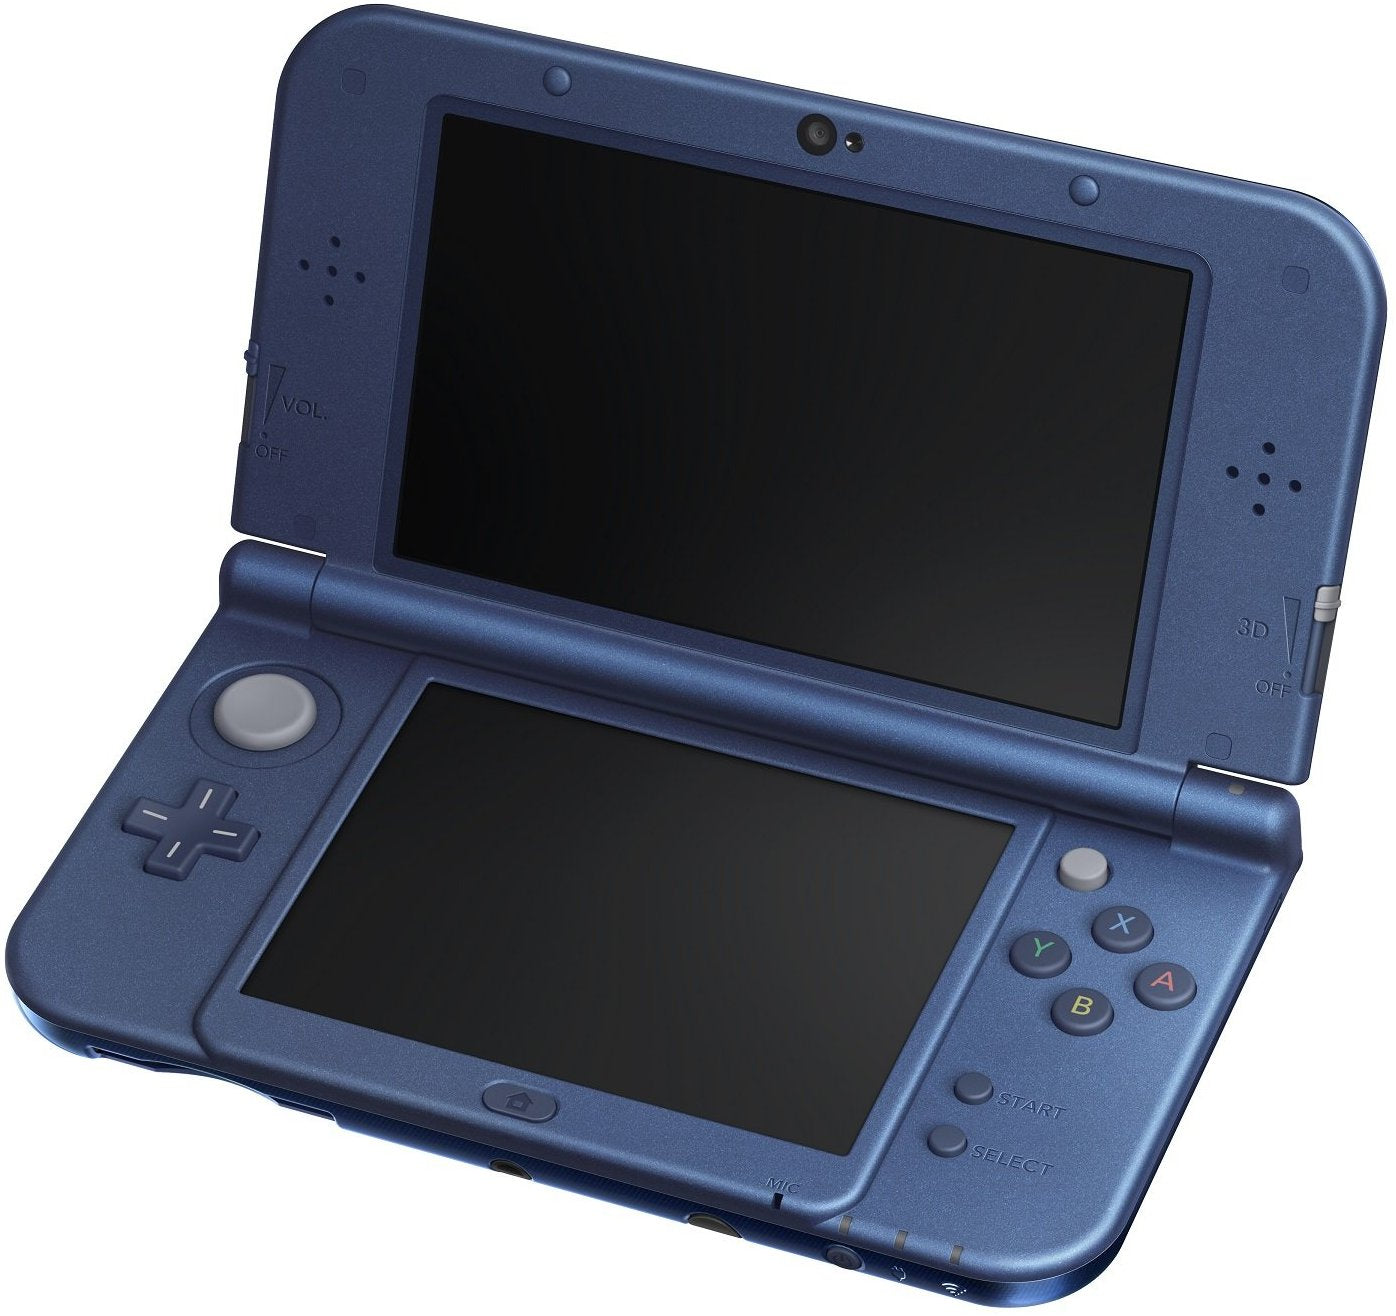 Nintendo New 3DS XL - Galaxy Style Consoles Nintendo   